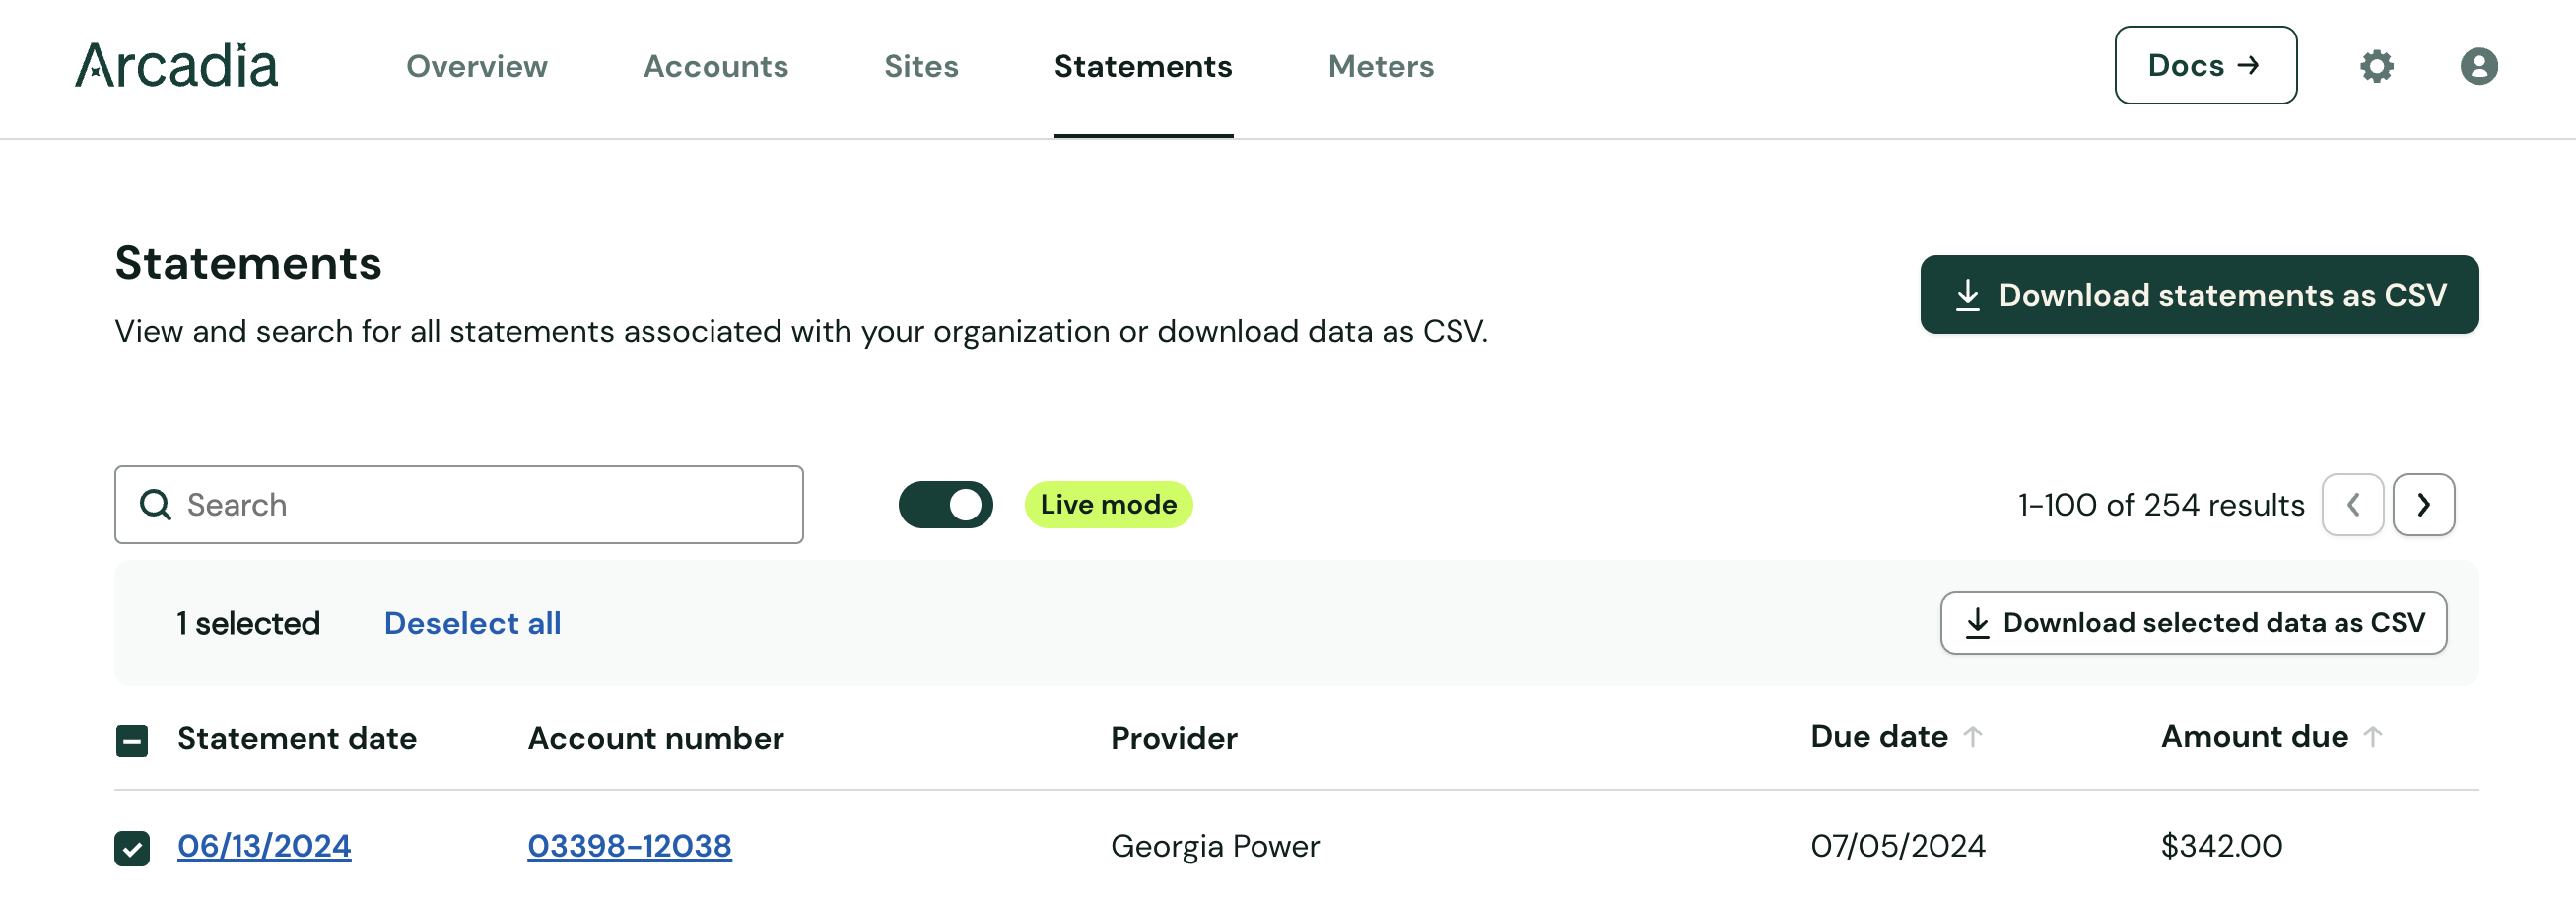 Example of utilizing default CSV downloads